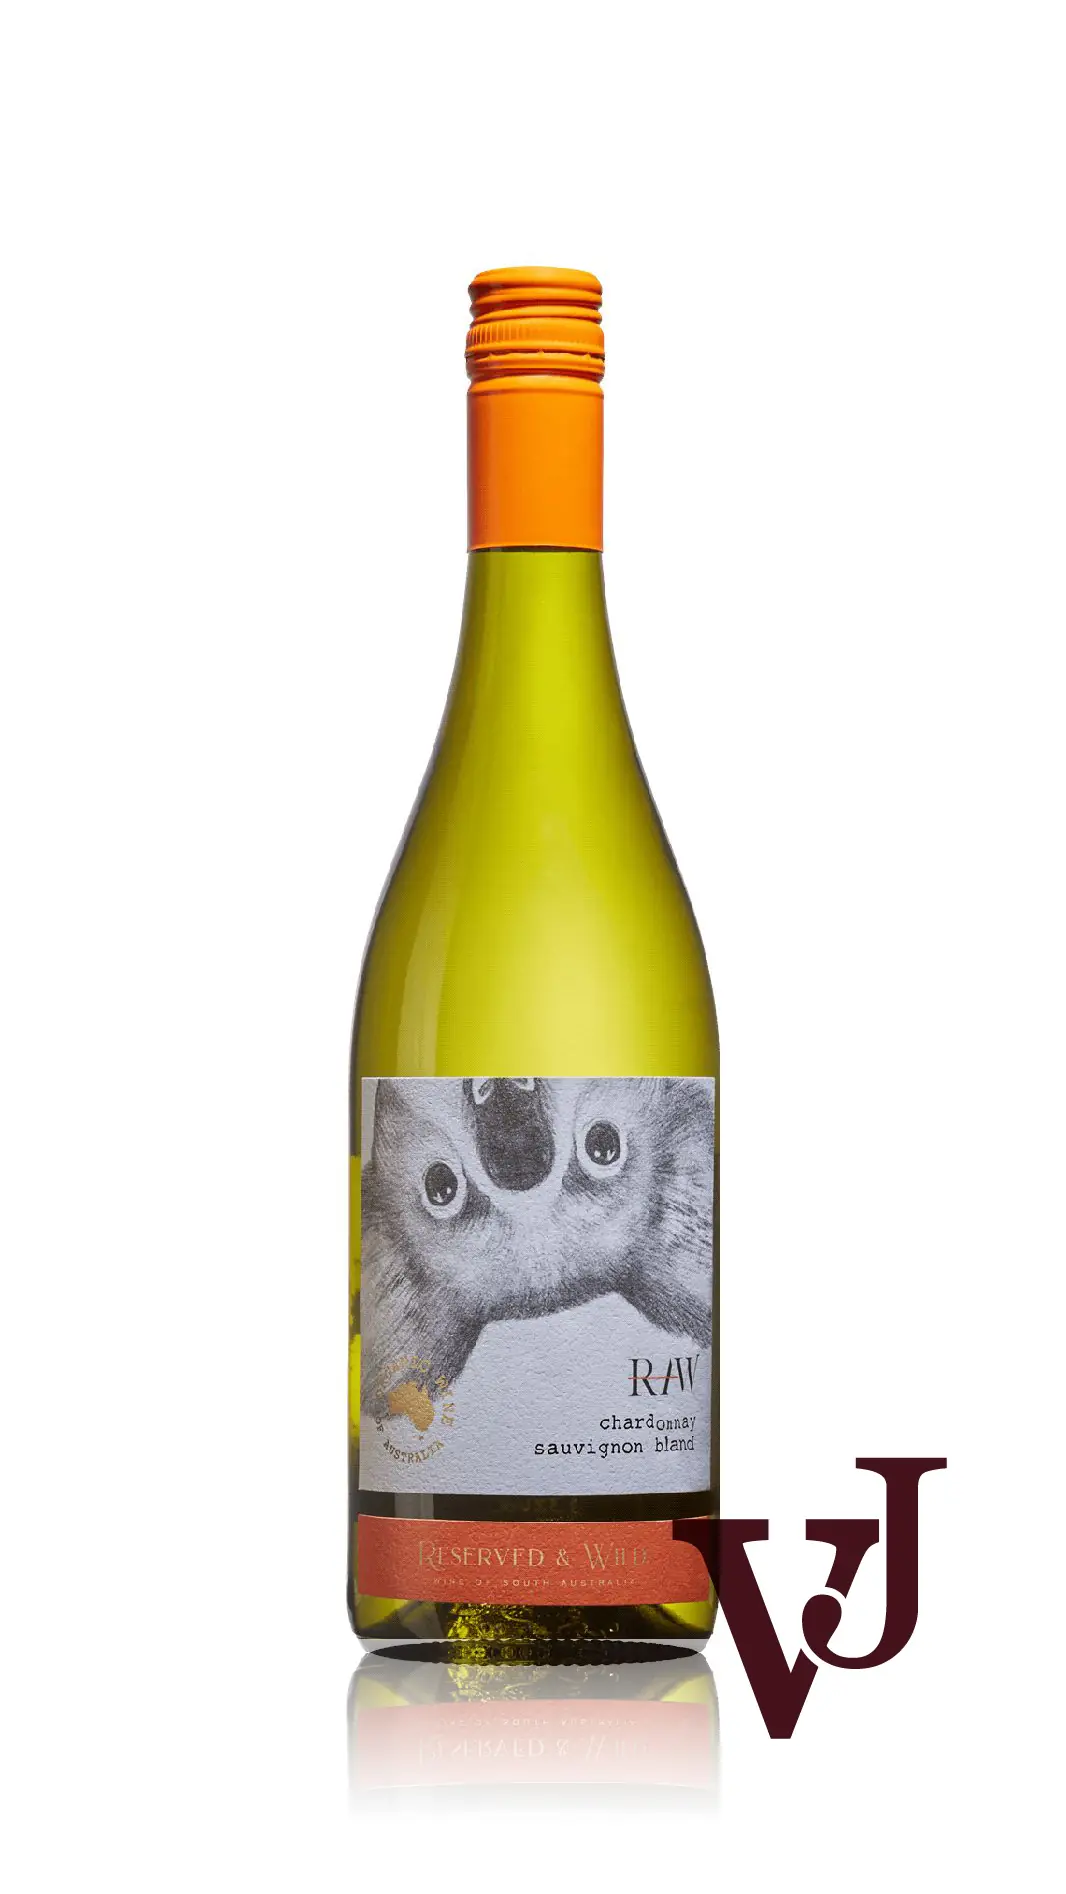 Vitt Vin - Reserved & Wild Organic Chardonnay Sauvignon Blanc artikel nummer 2003201 från producenten Vins Biecher från området Australien - Vinjournalen.se